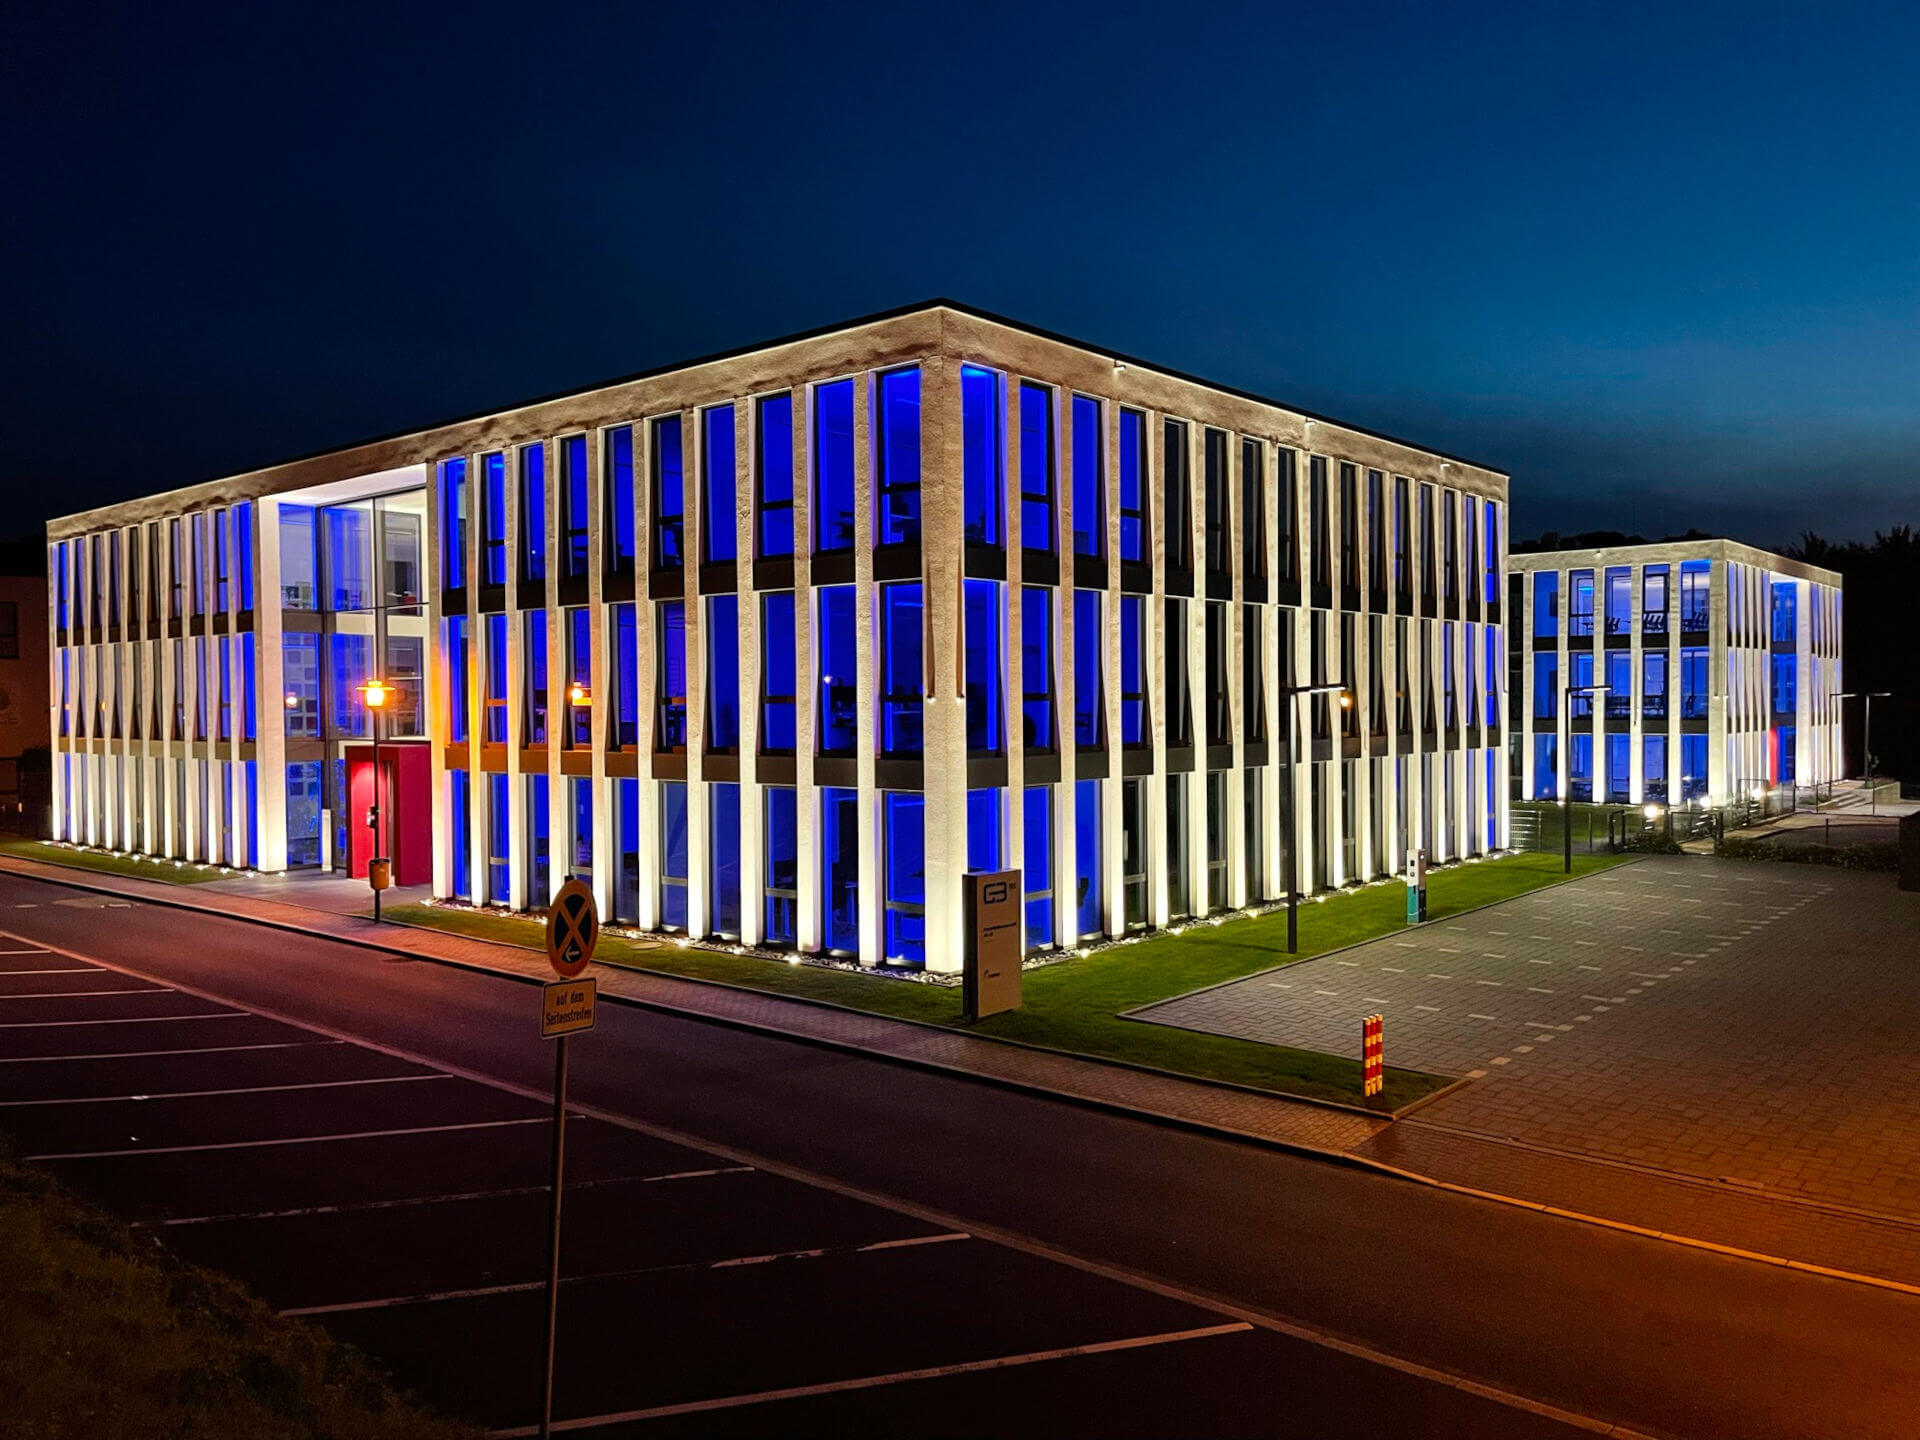 Lichtplanung & Beleuchtung von Büroflächen  - LICHTAKTIV.de